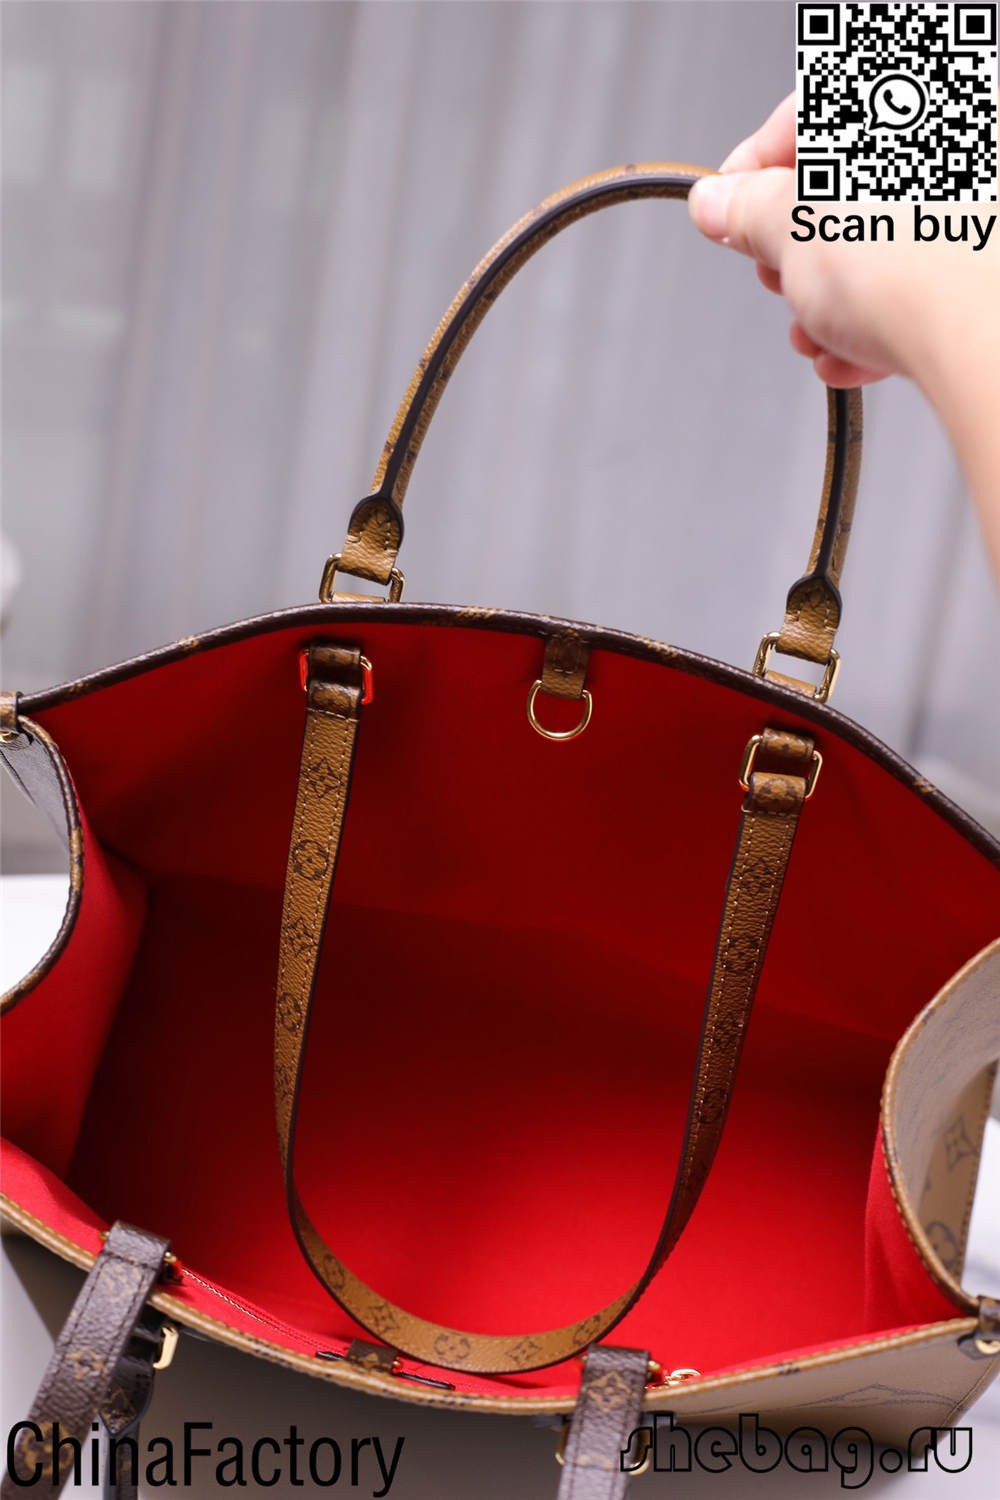 Acheter louis vuitton jeff koons réplique sac uk (2022 dernier)-Best Quality Fake Louis Vuitton Bag Online Store, Replica designer bag ru